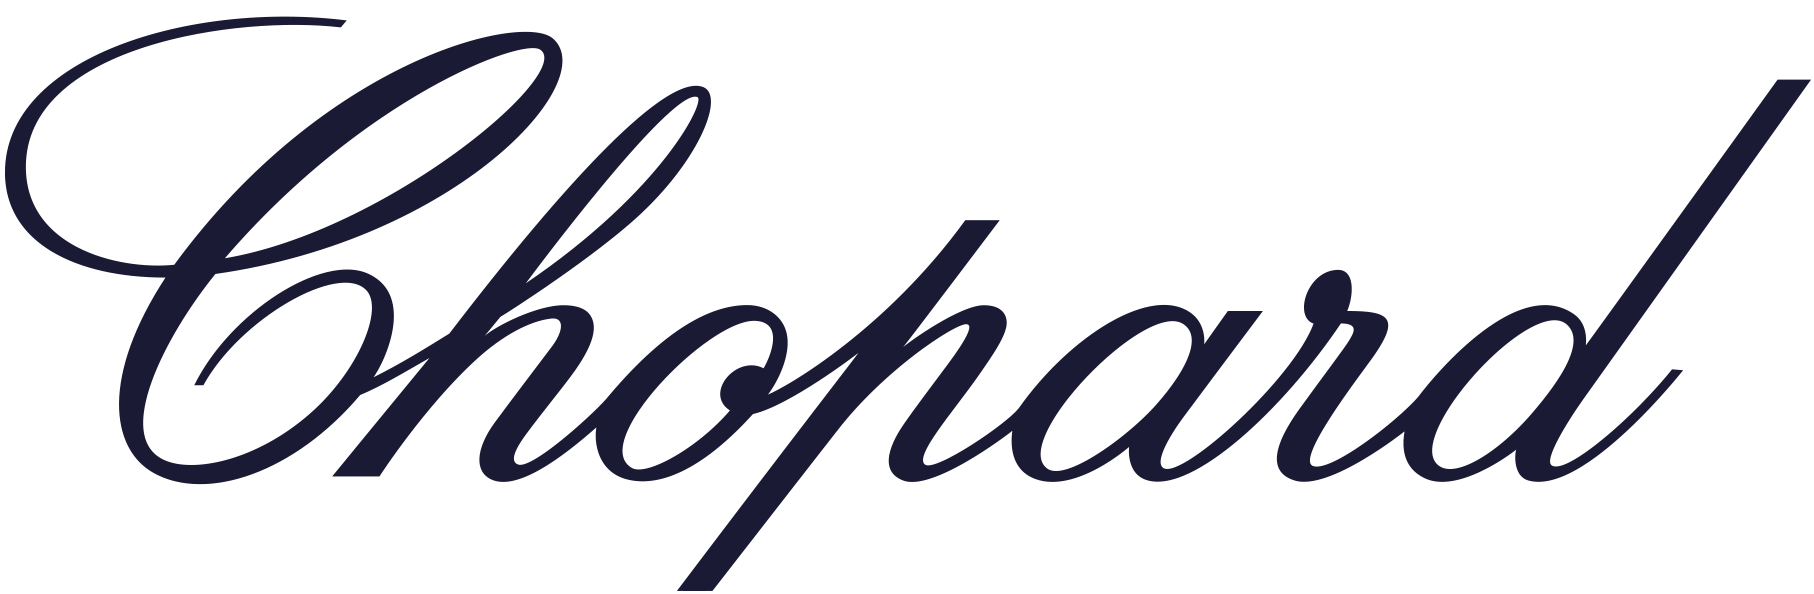 Switzerland Watch Logo - Chopard - Swiss Luxury Watches and Jewellery Manufacturer